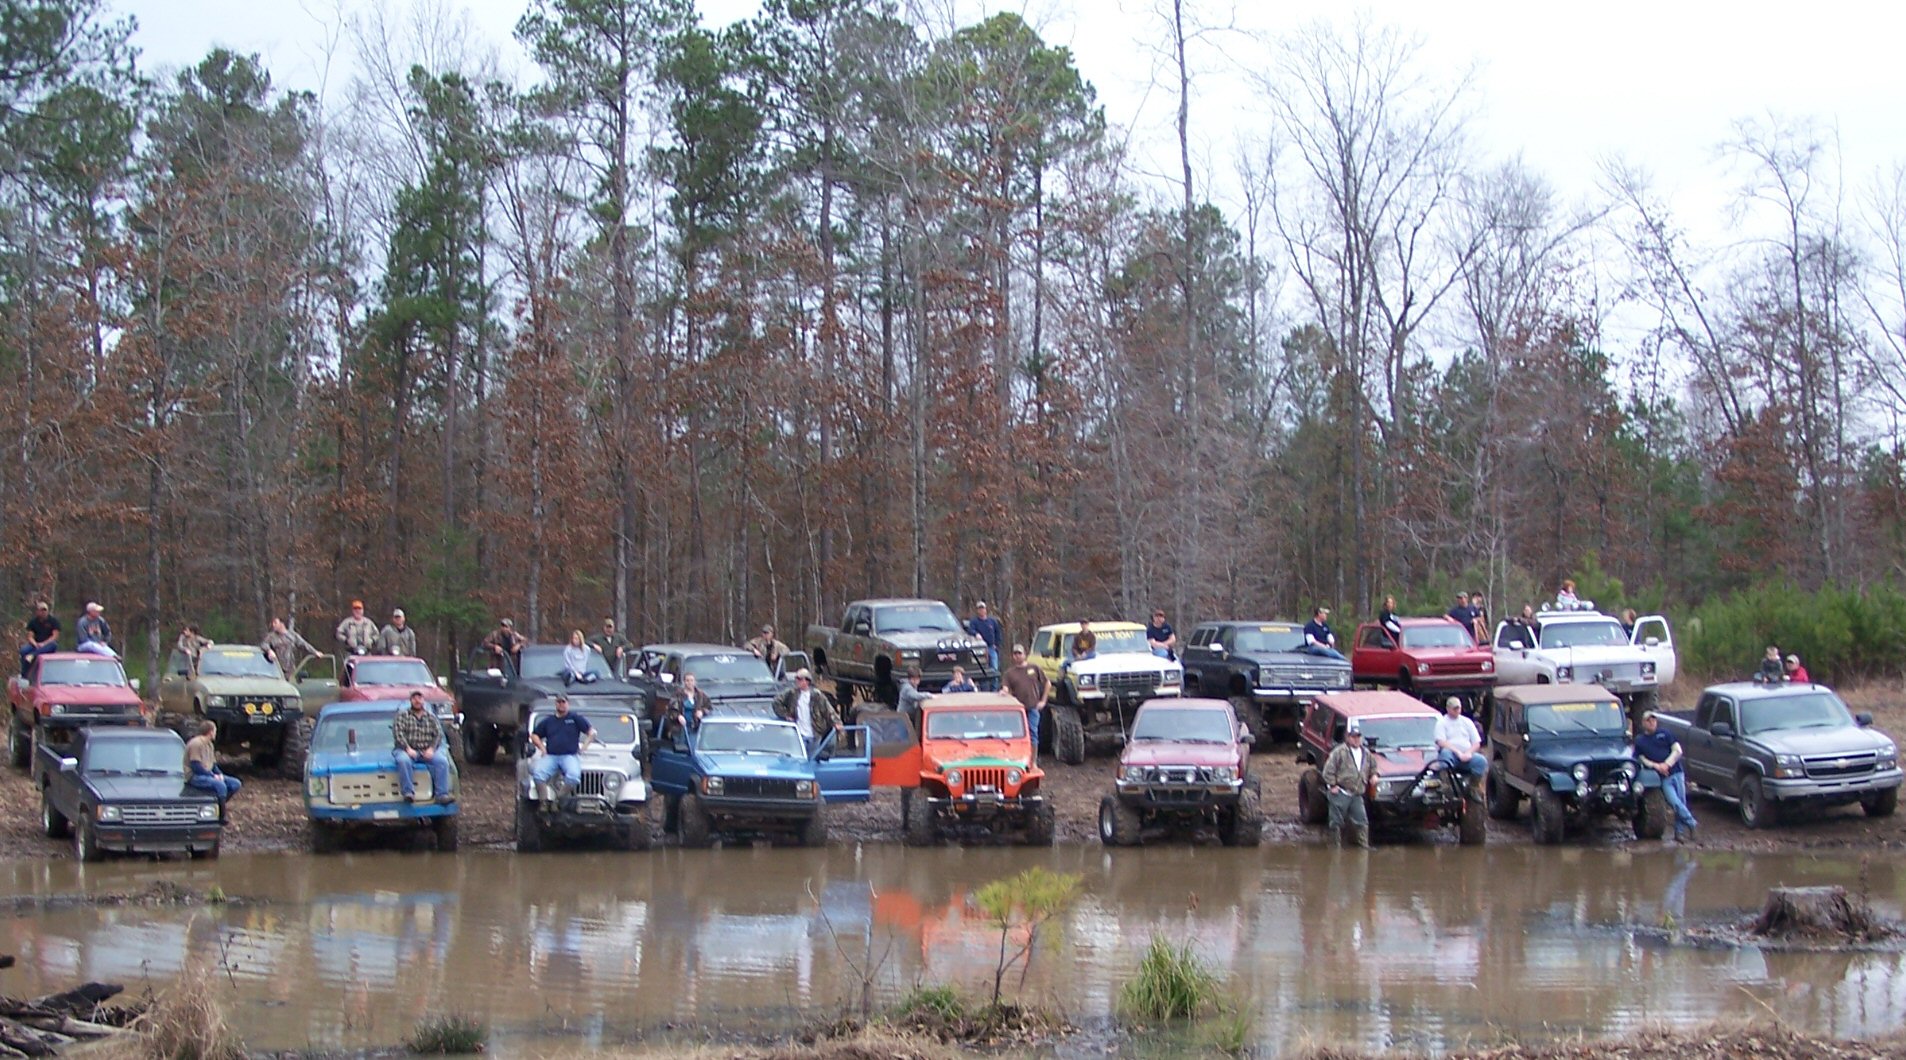 MudStruck members getting ready to play in the Arkansas mud!!